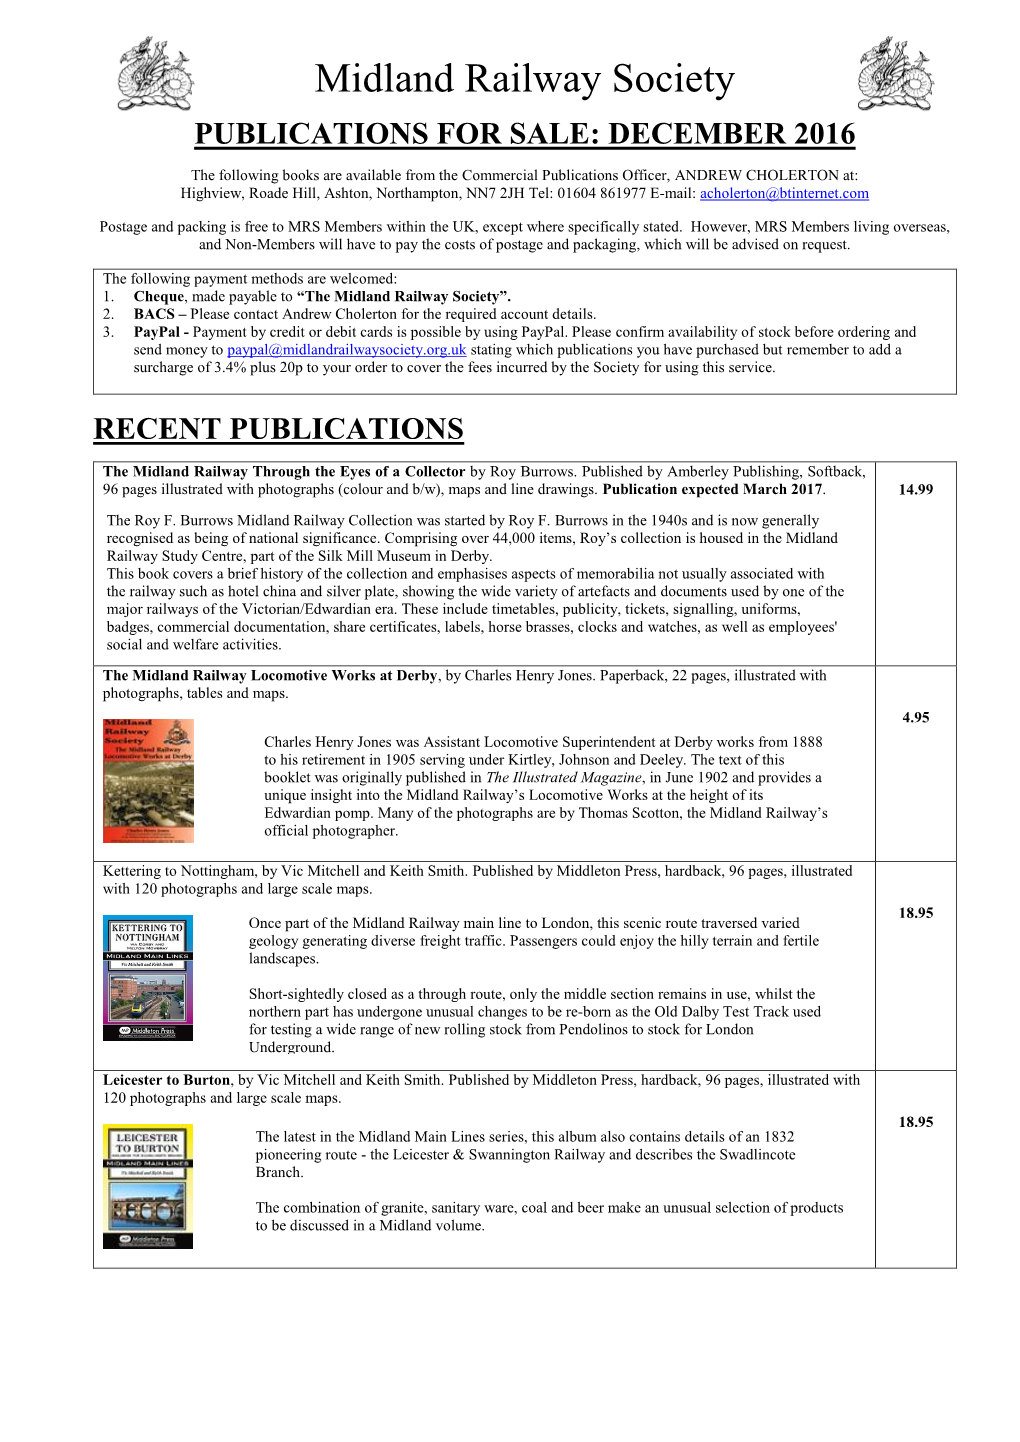 PUBLICATIONS for SALE: September 2007